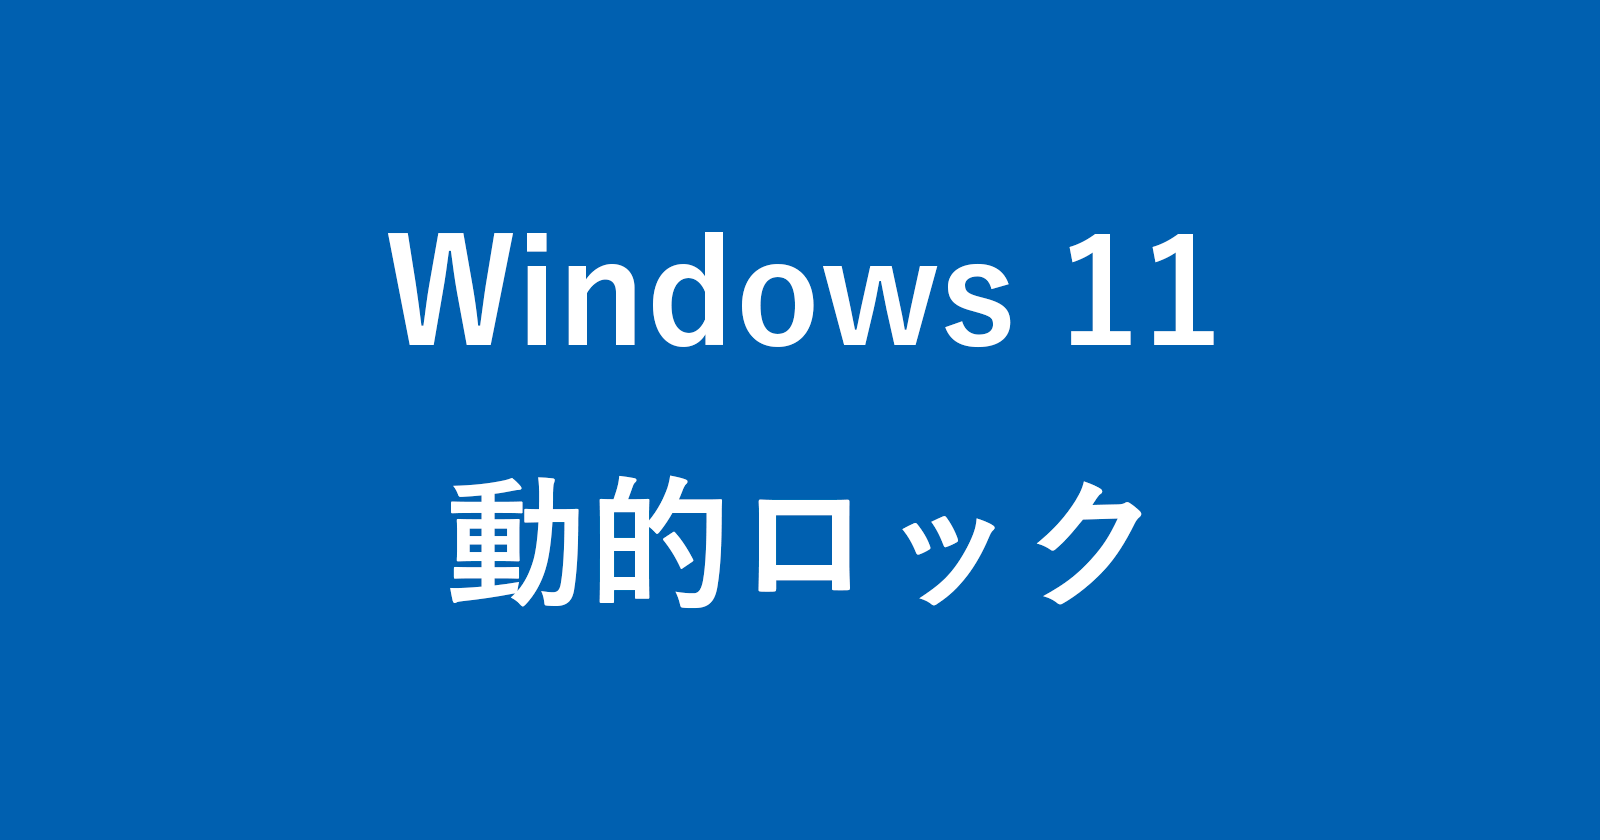 windows 11 dynamic lock